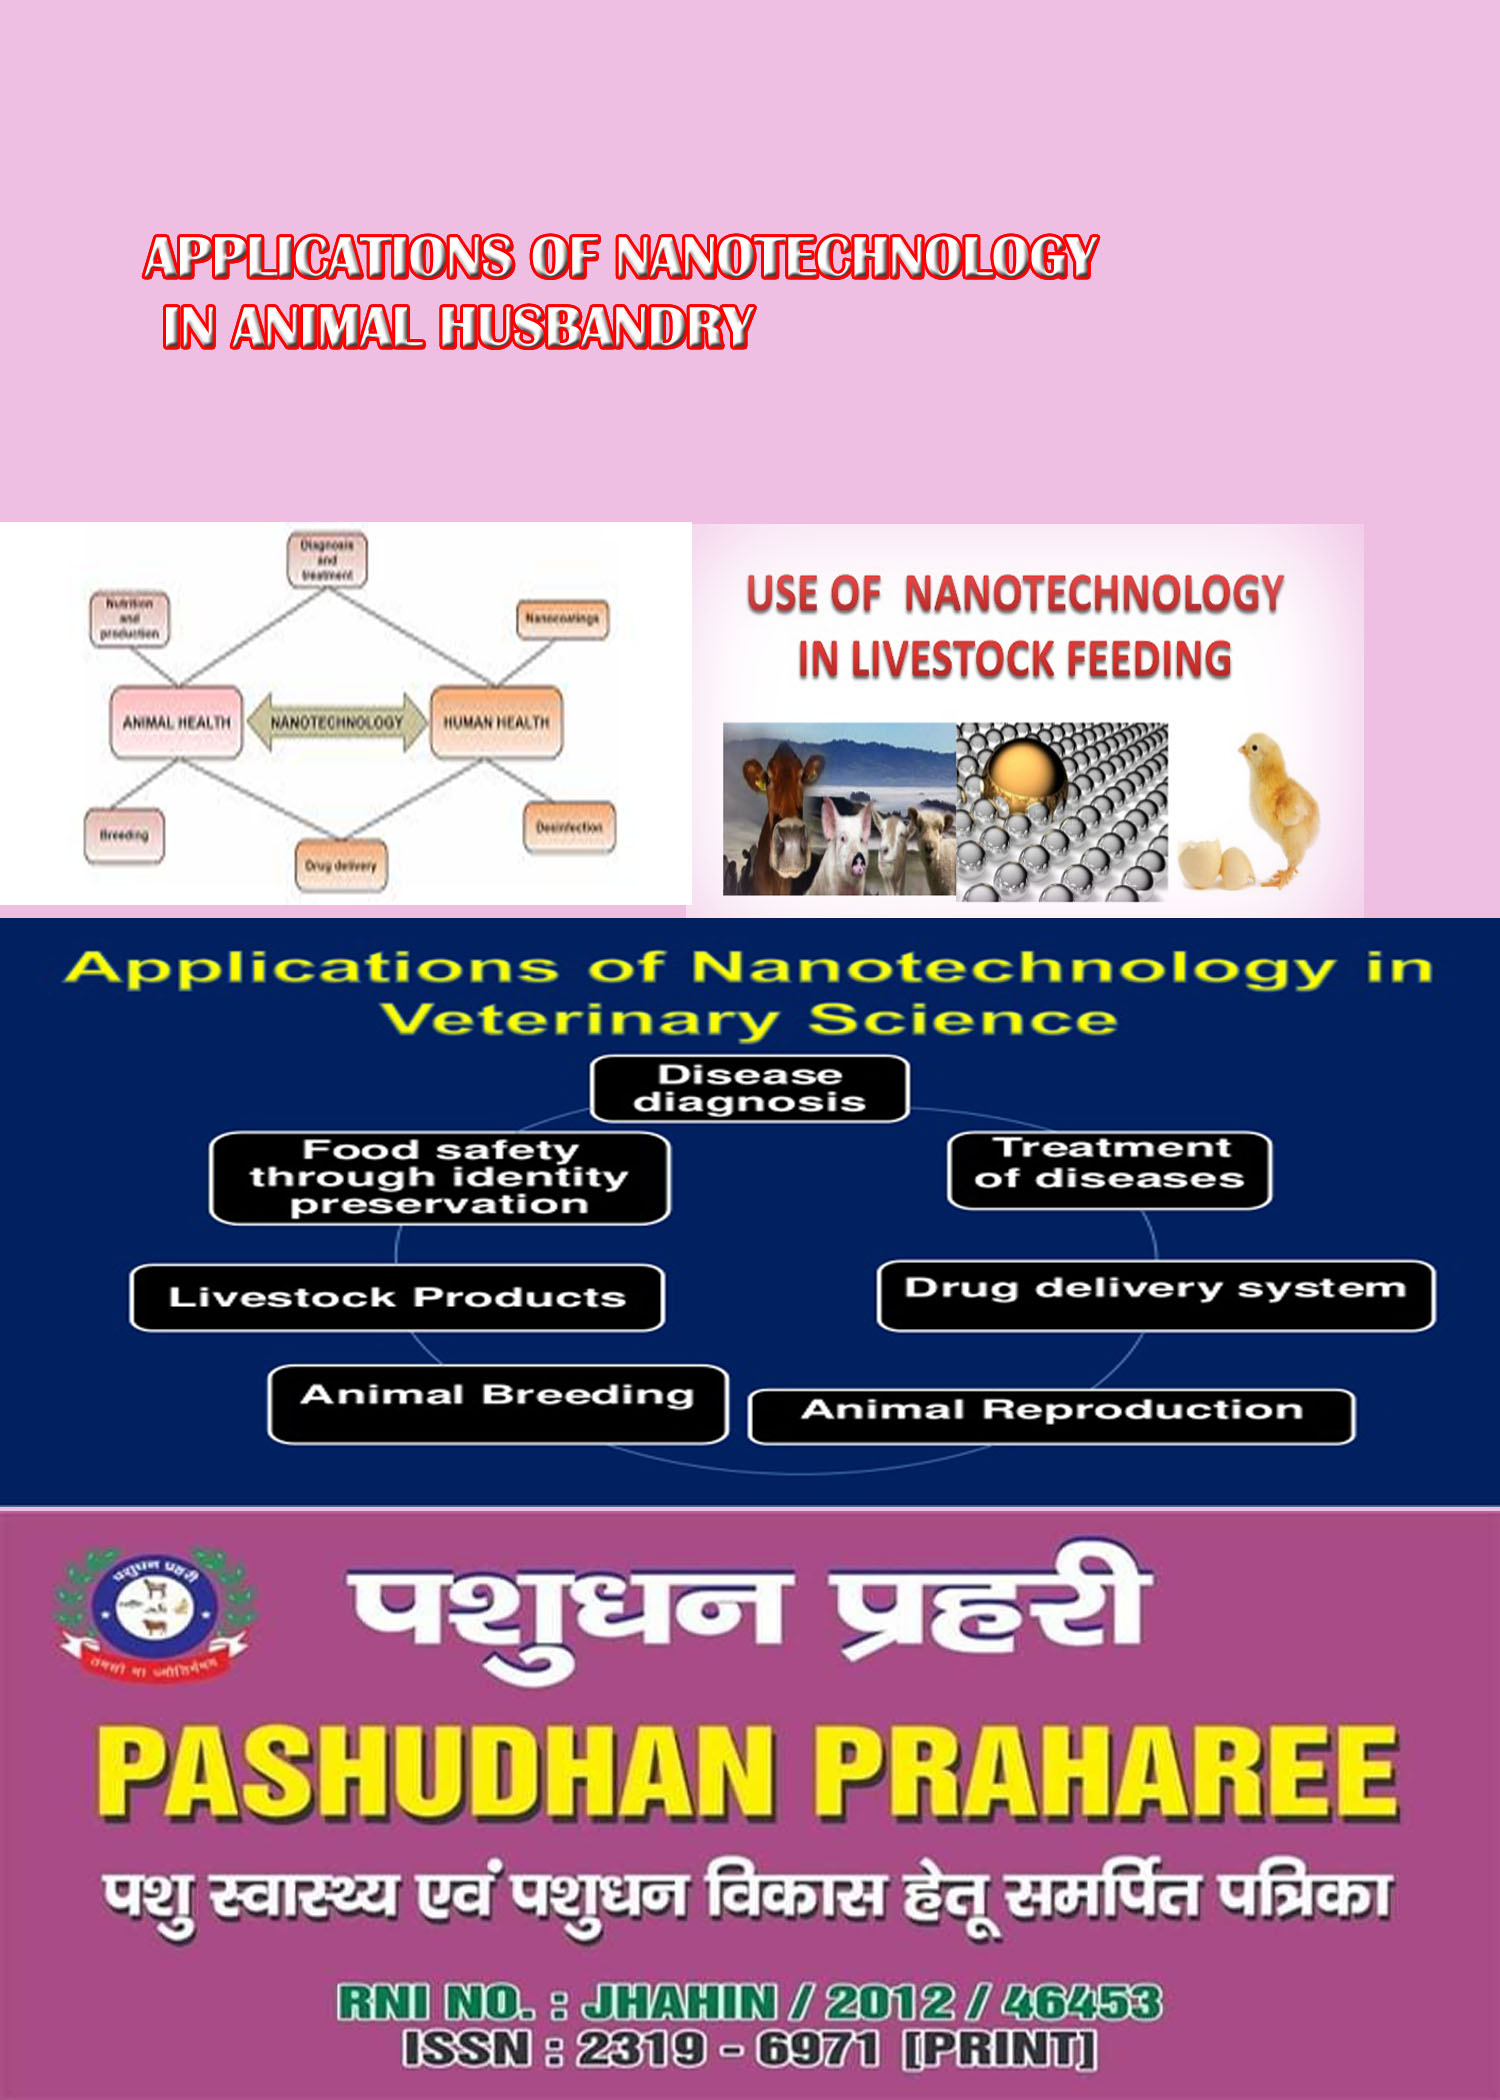 APPLICATIONS OF NANOTECHNOLOGY IN ANIMAL HUSBANDRY – Pashudhan praharee